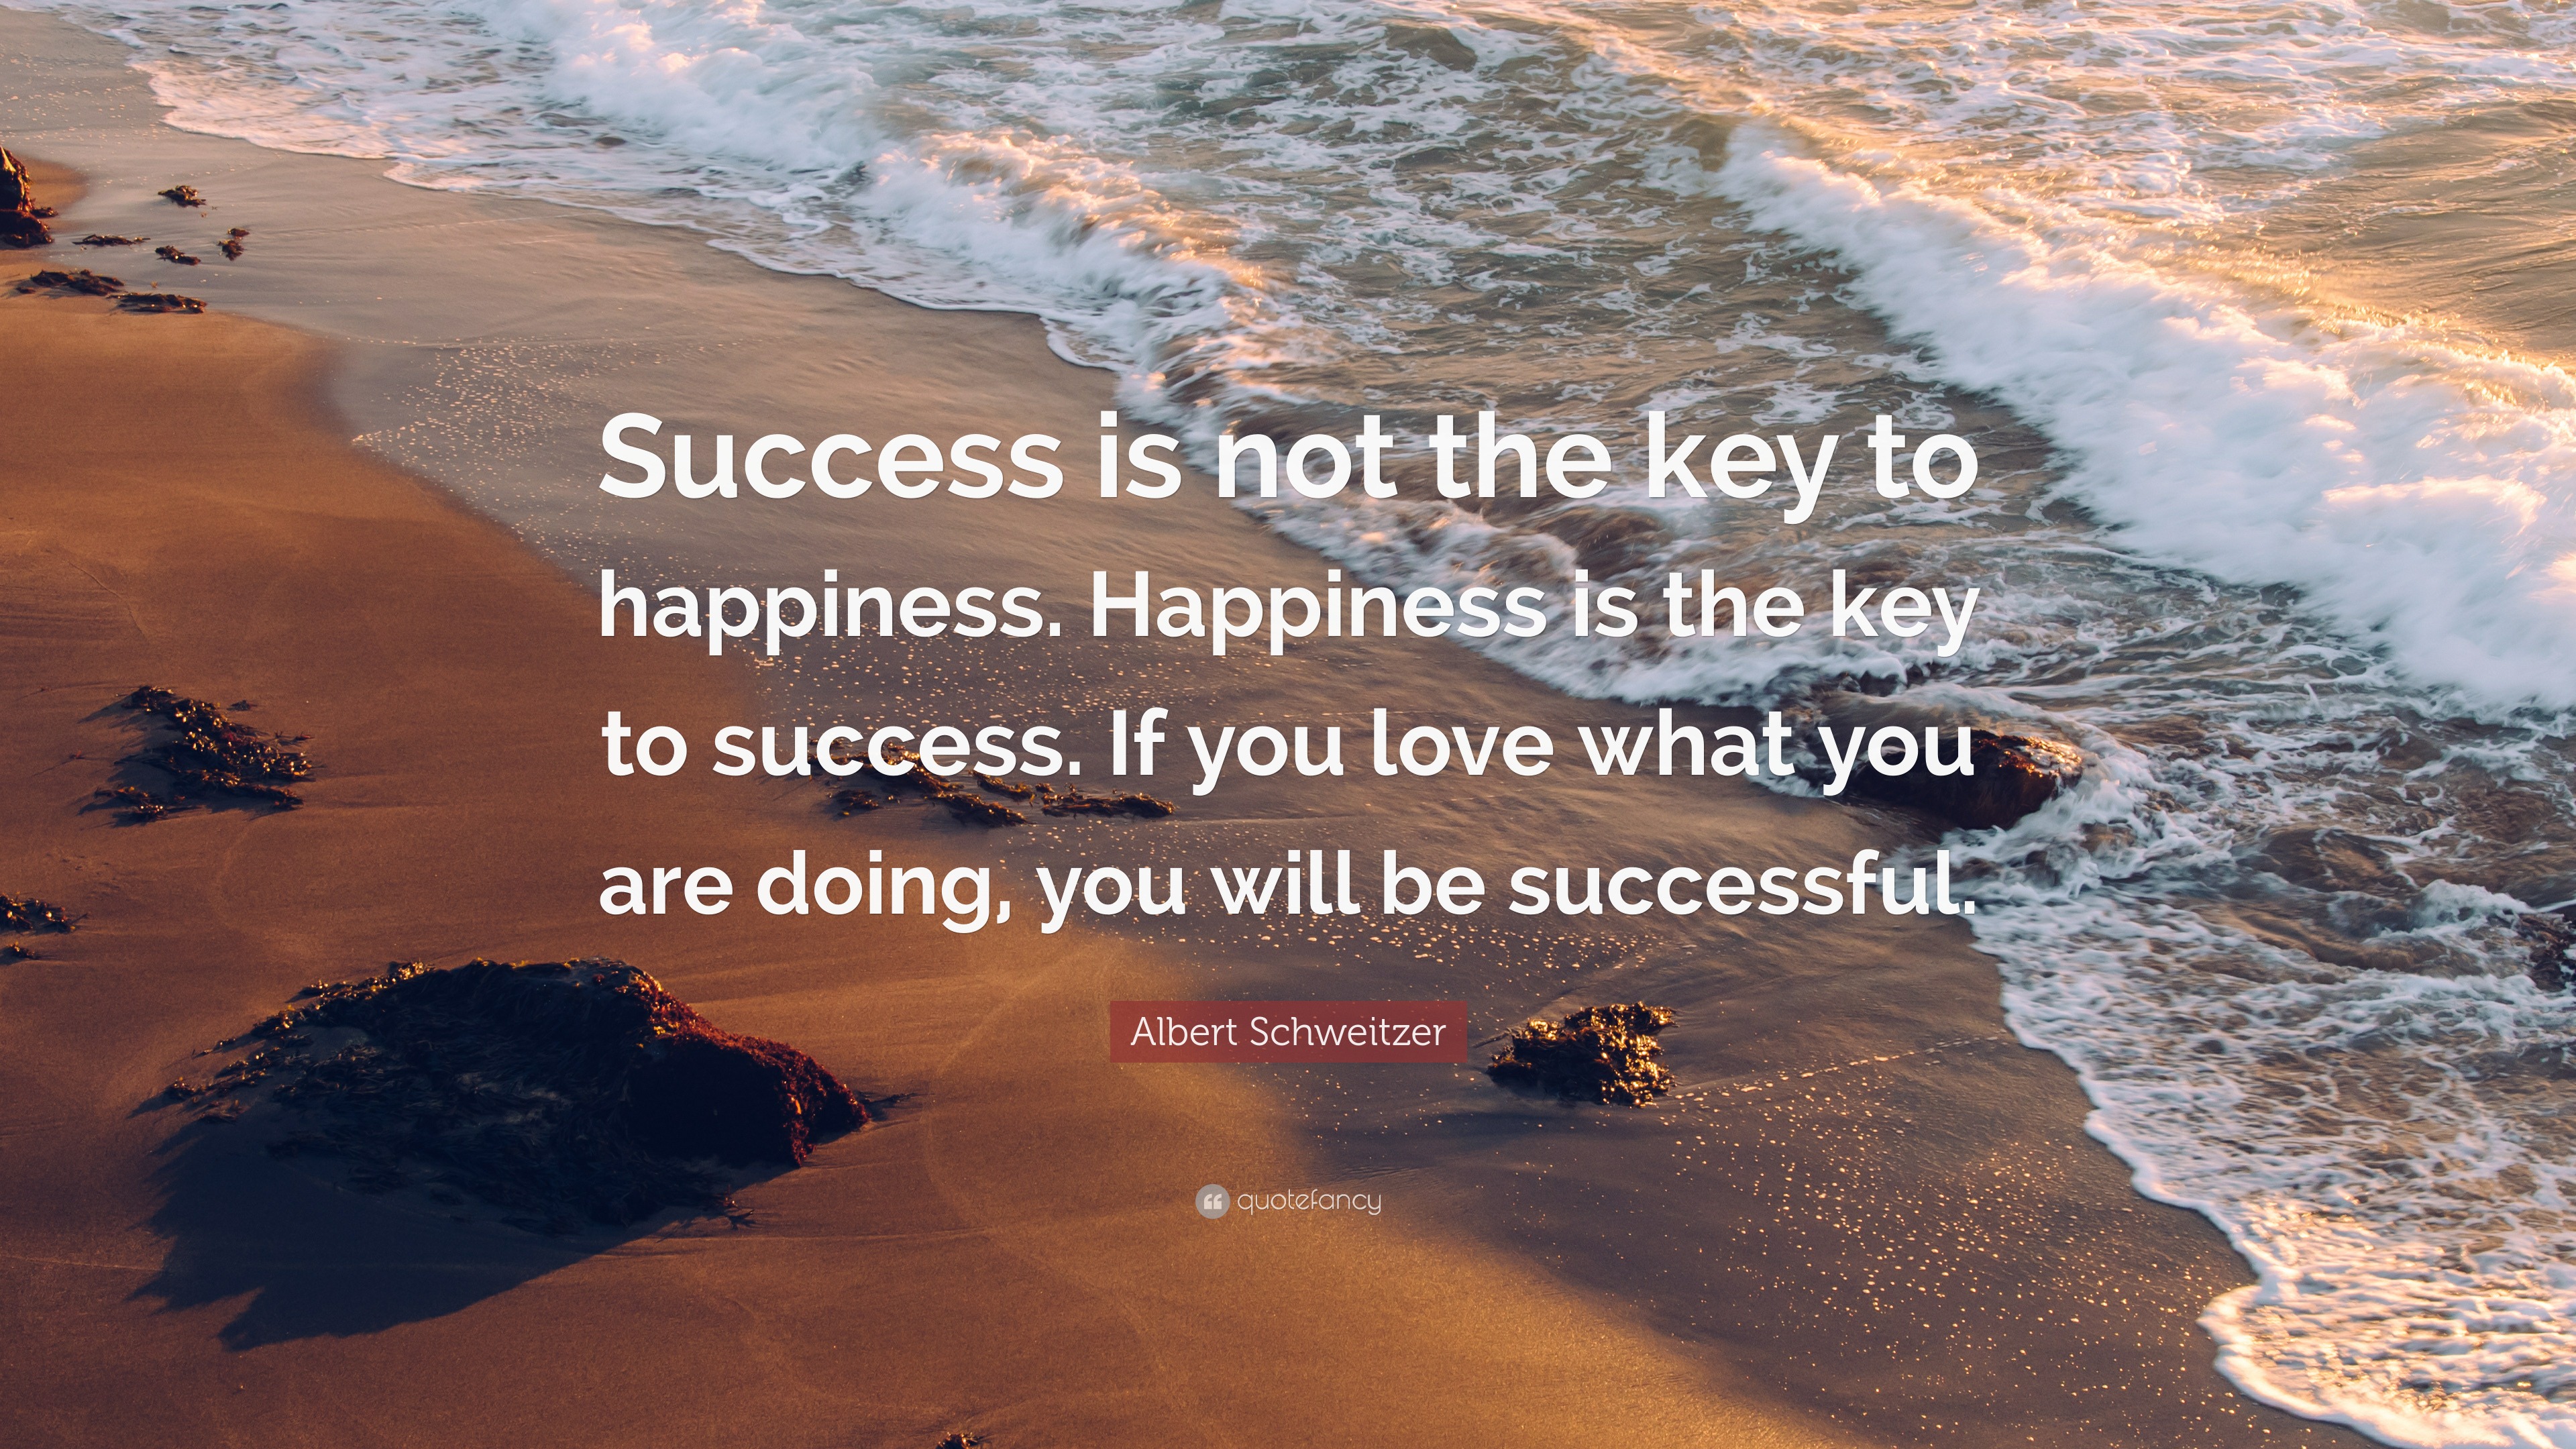 Albert Schweitzer Quote “Success is not the key to happiness